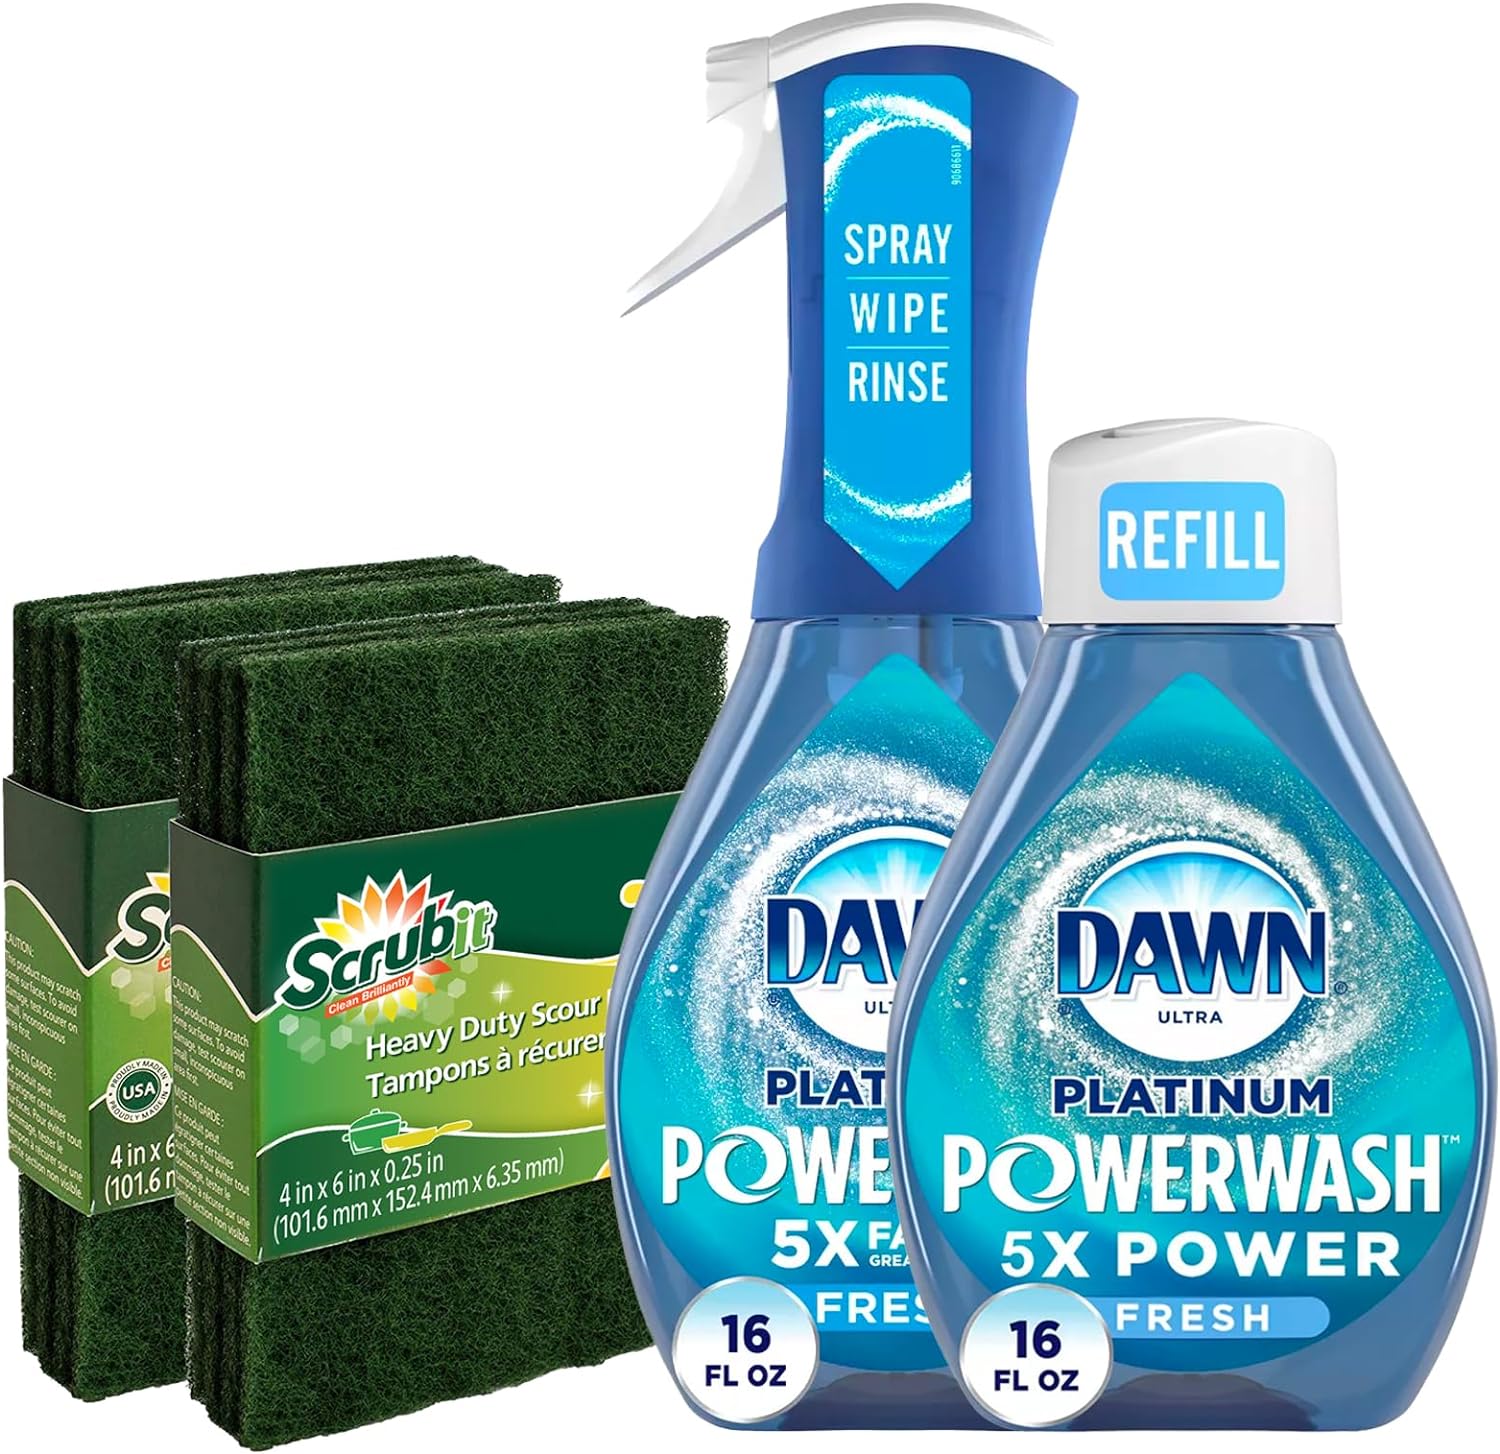 Dawn Powerwash Spray Platinum Dish Soap - Fresh Scent + 1 Dawn Powerwash Refill, 16 fl oz each, With 6 Reusable Heavy Duty Scouring Pads